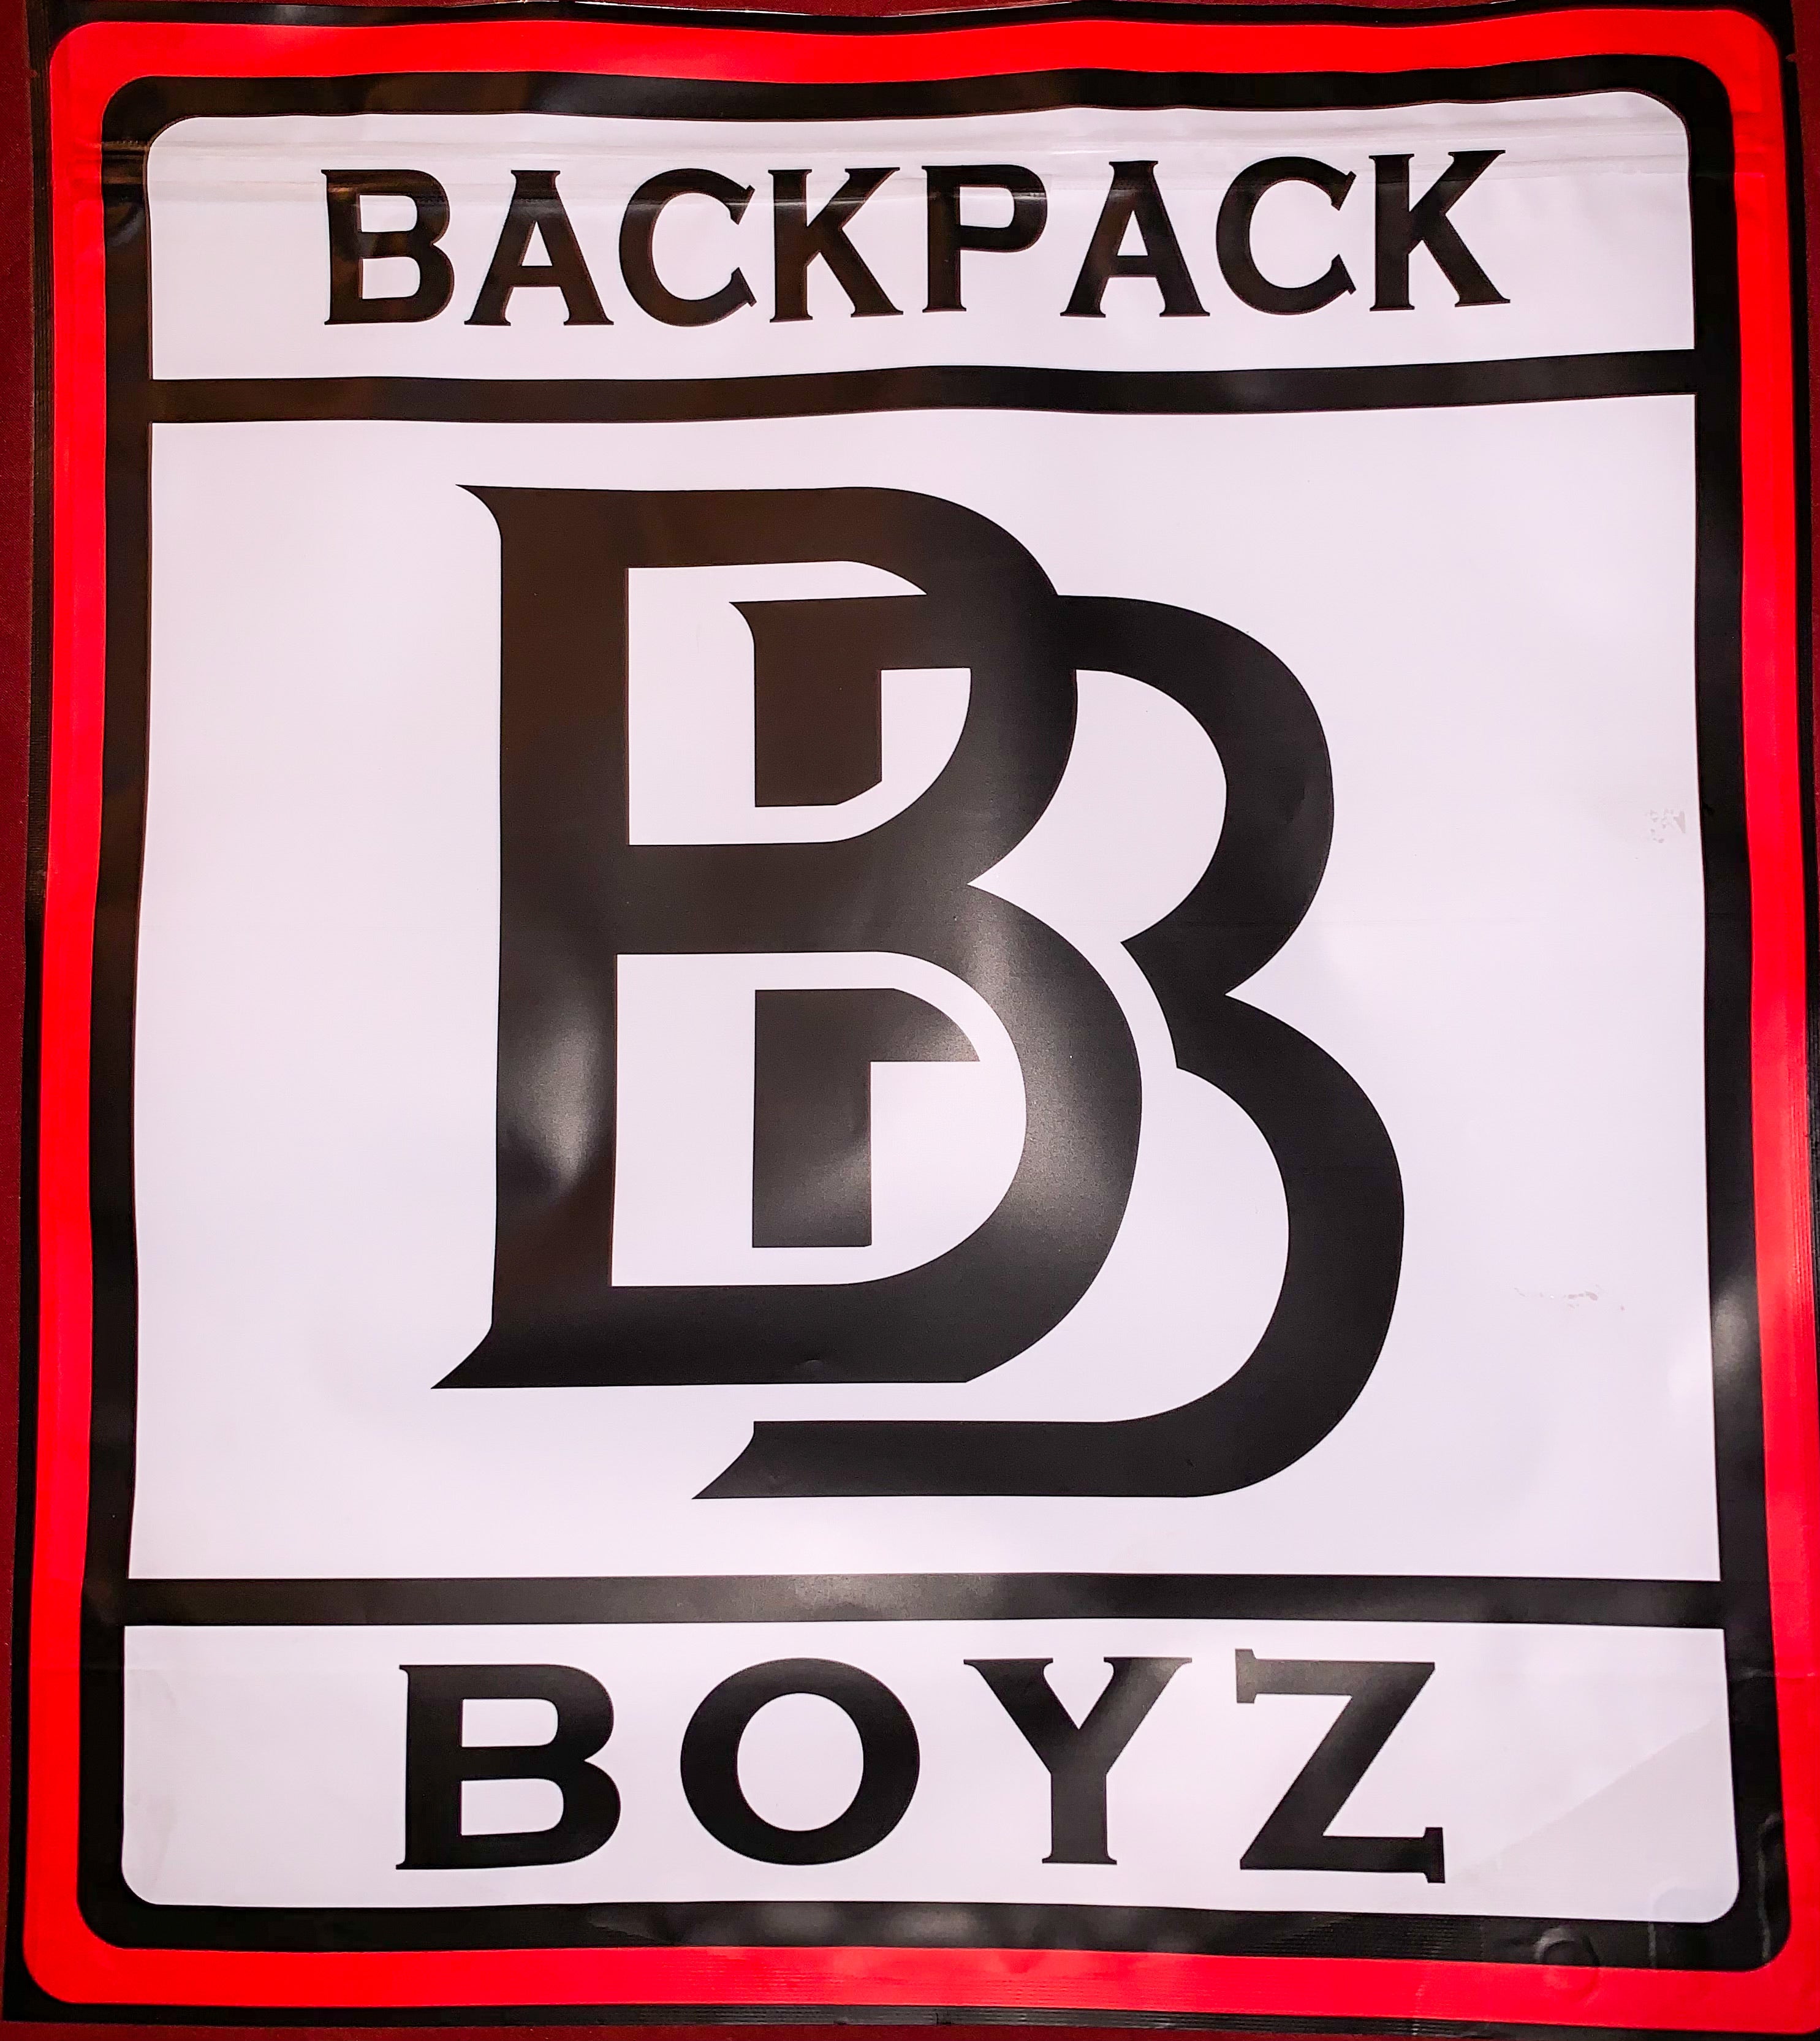 Backpack Boyz  1 Pound (16oz) mylar bags